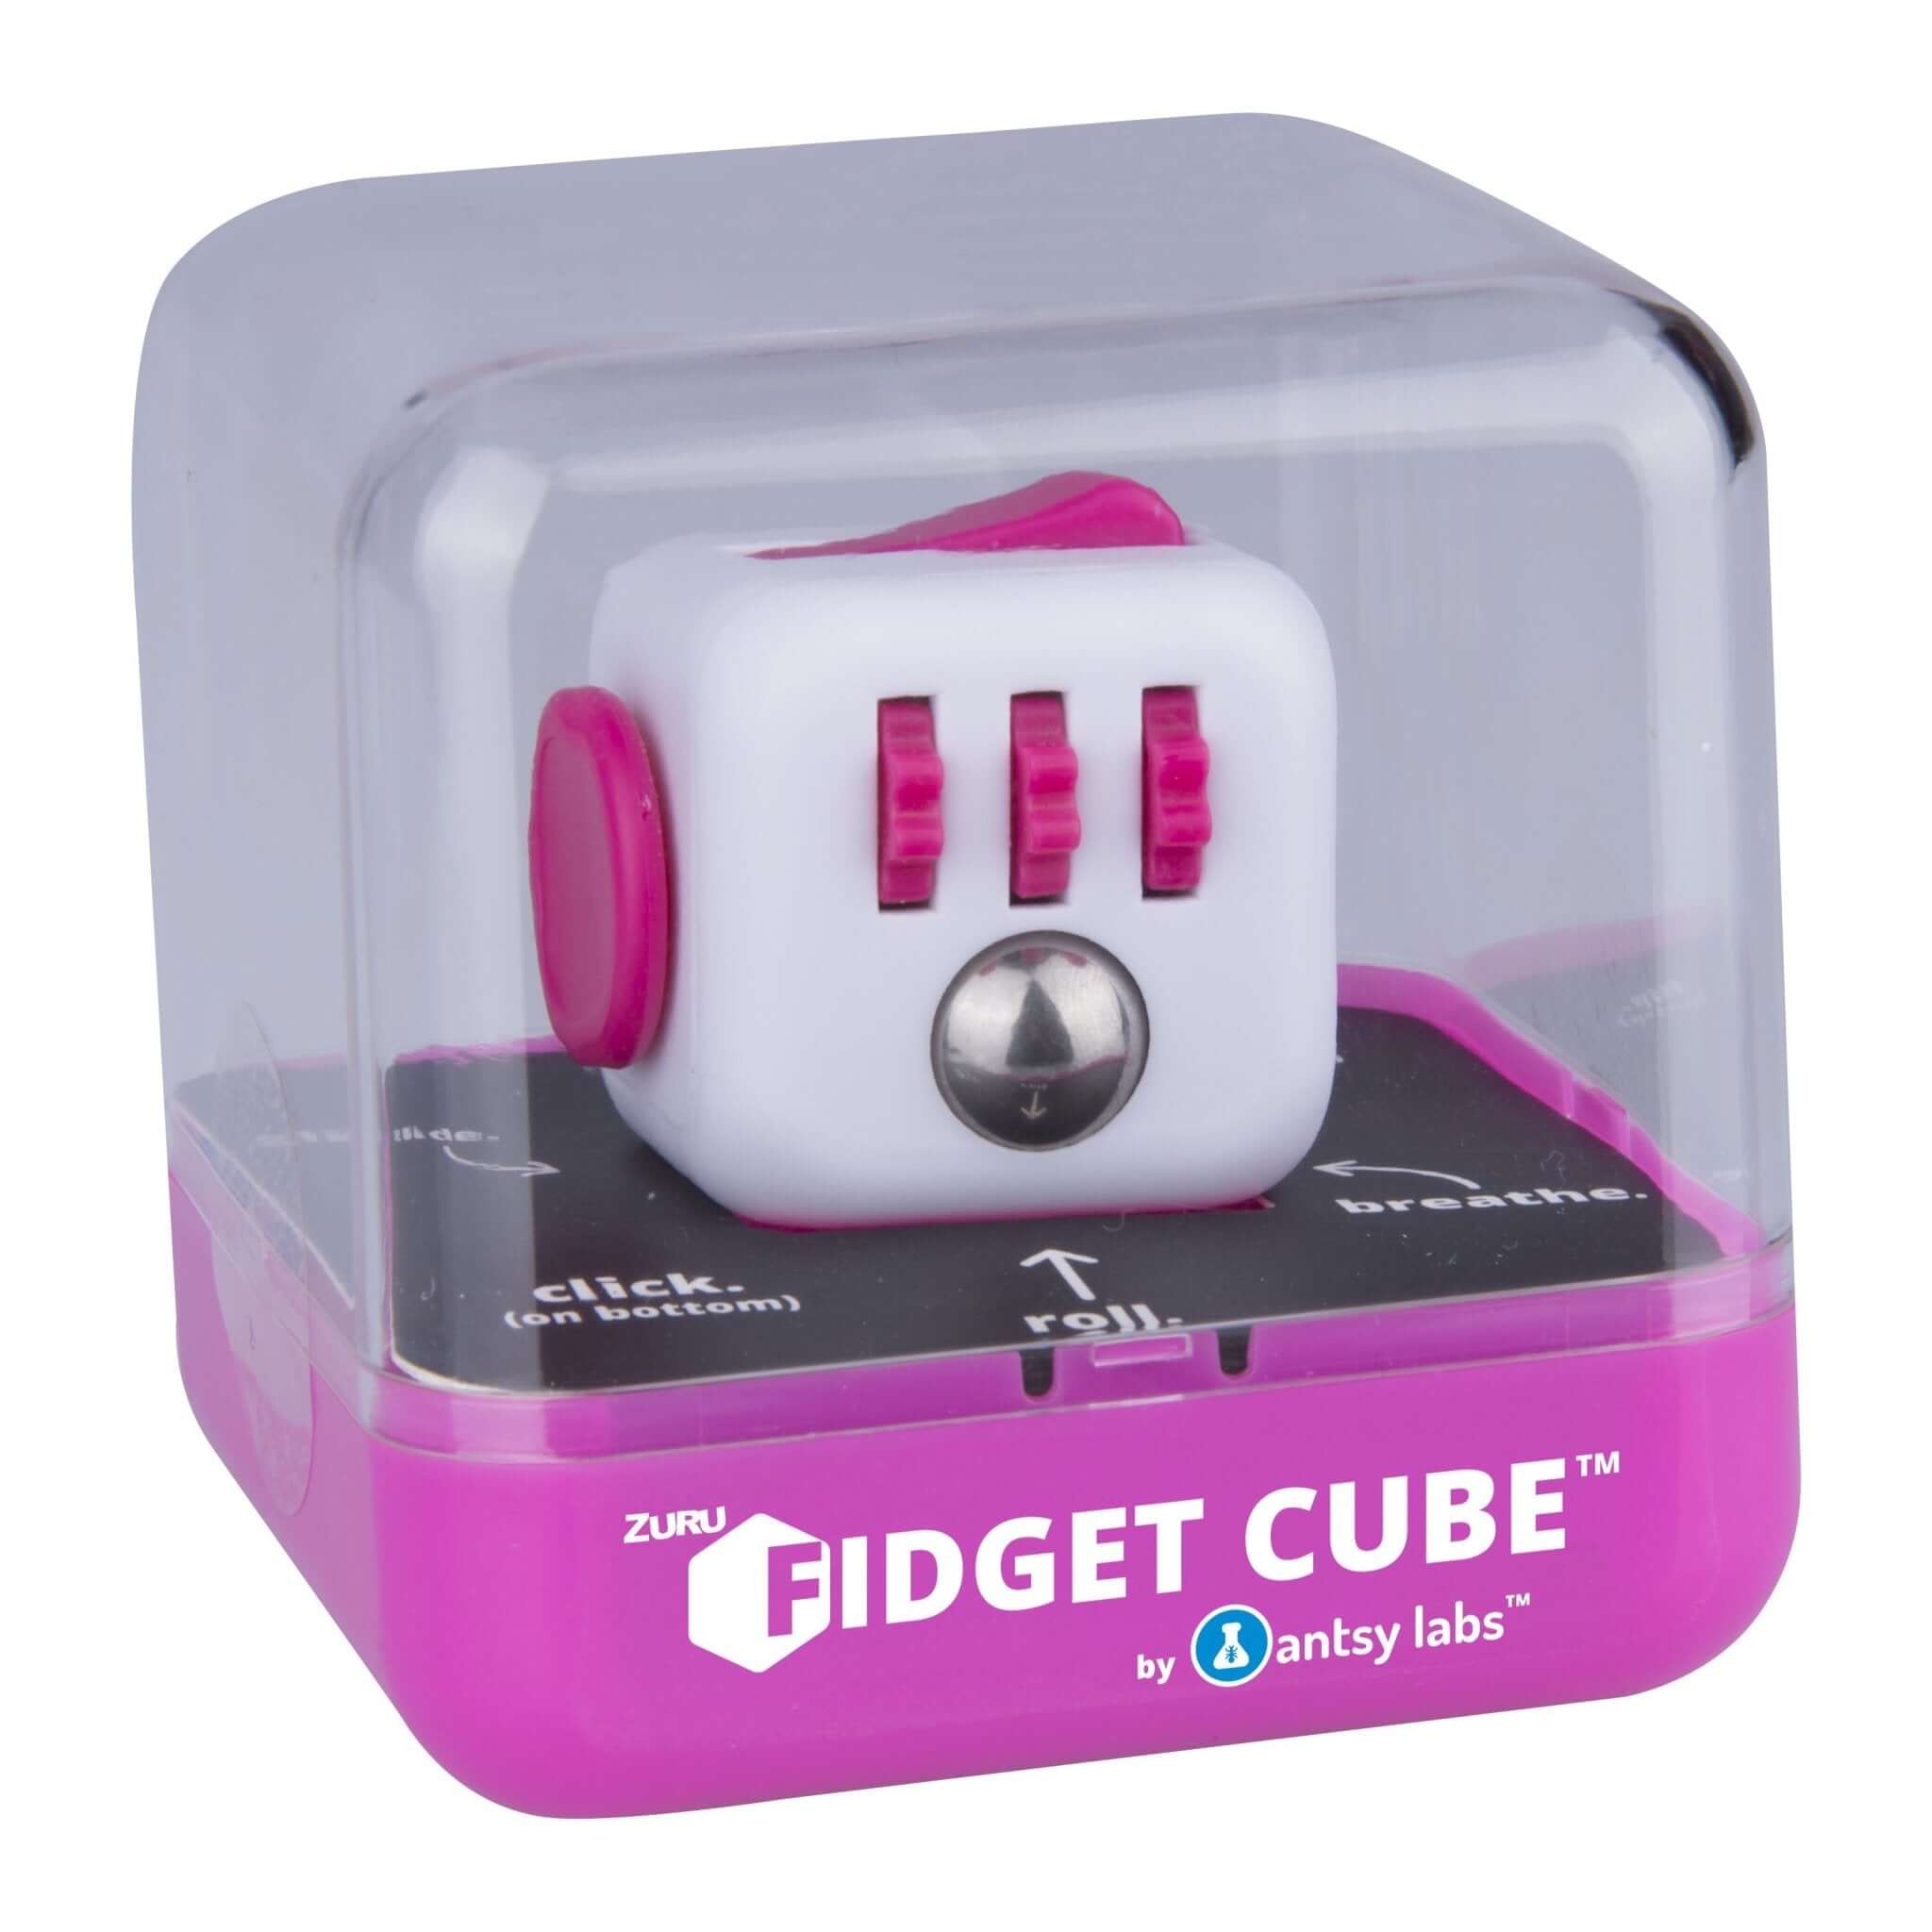 Gidget cube - Cubo Antiestres - Entretenimiento